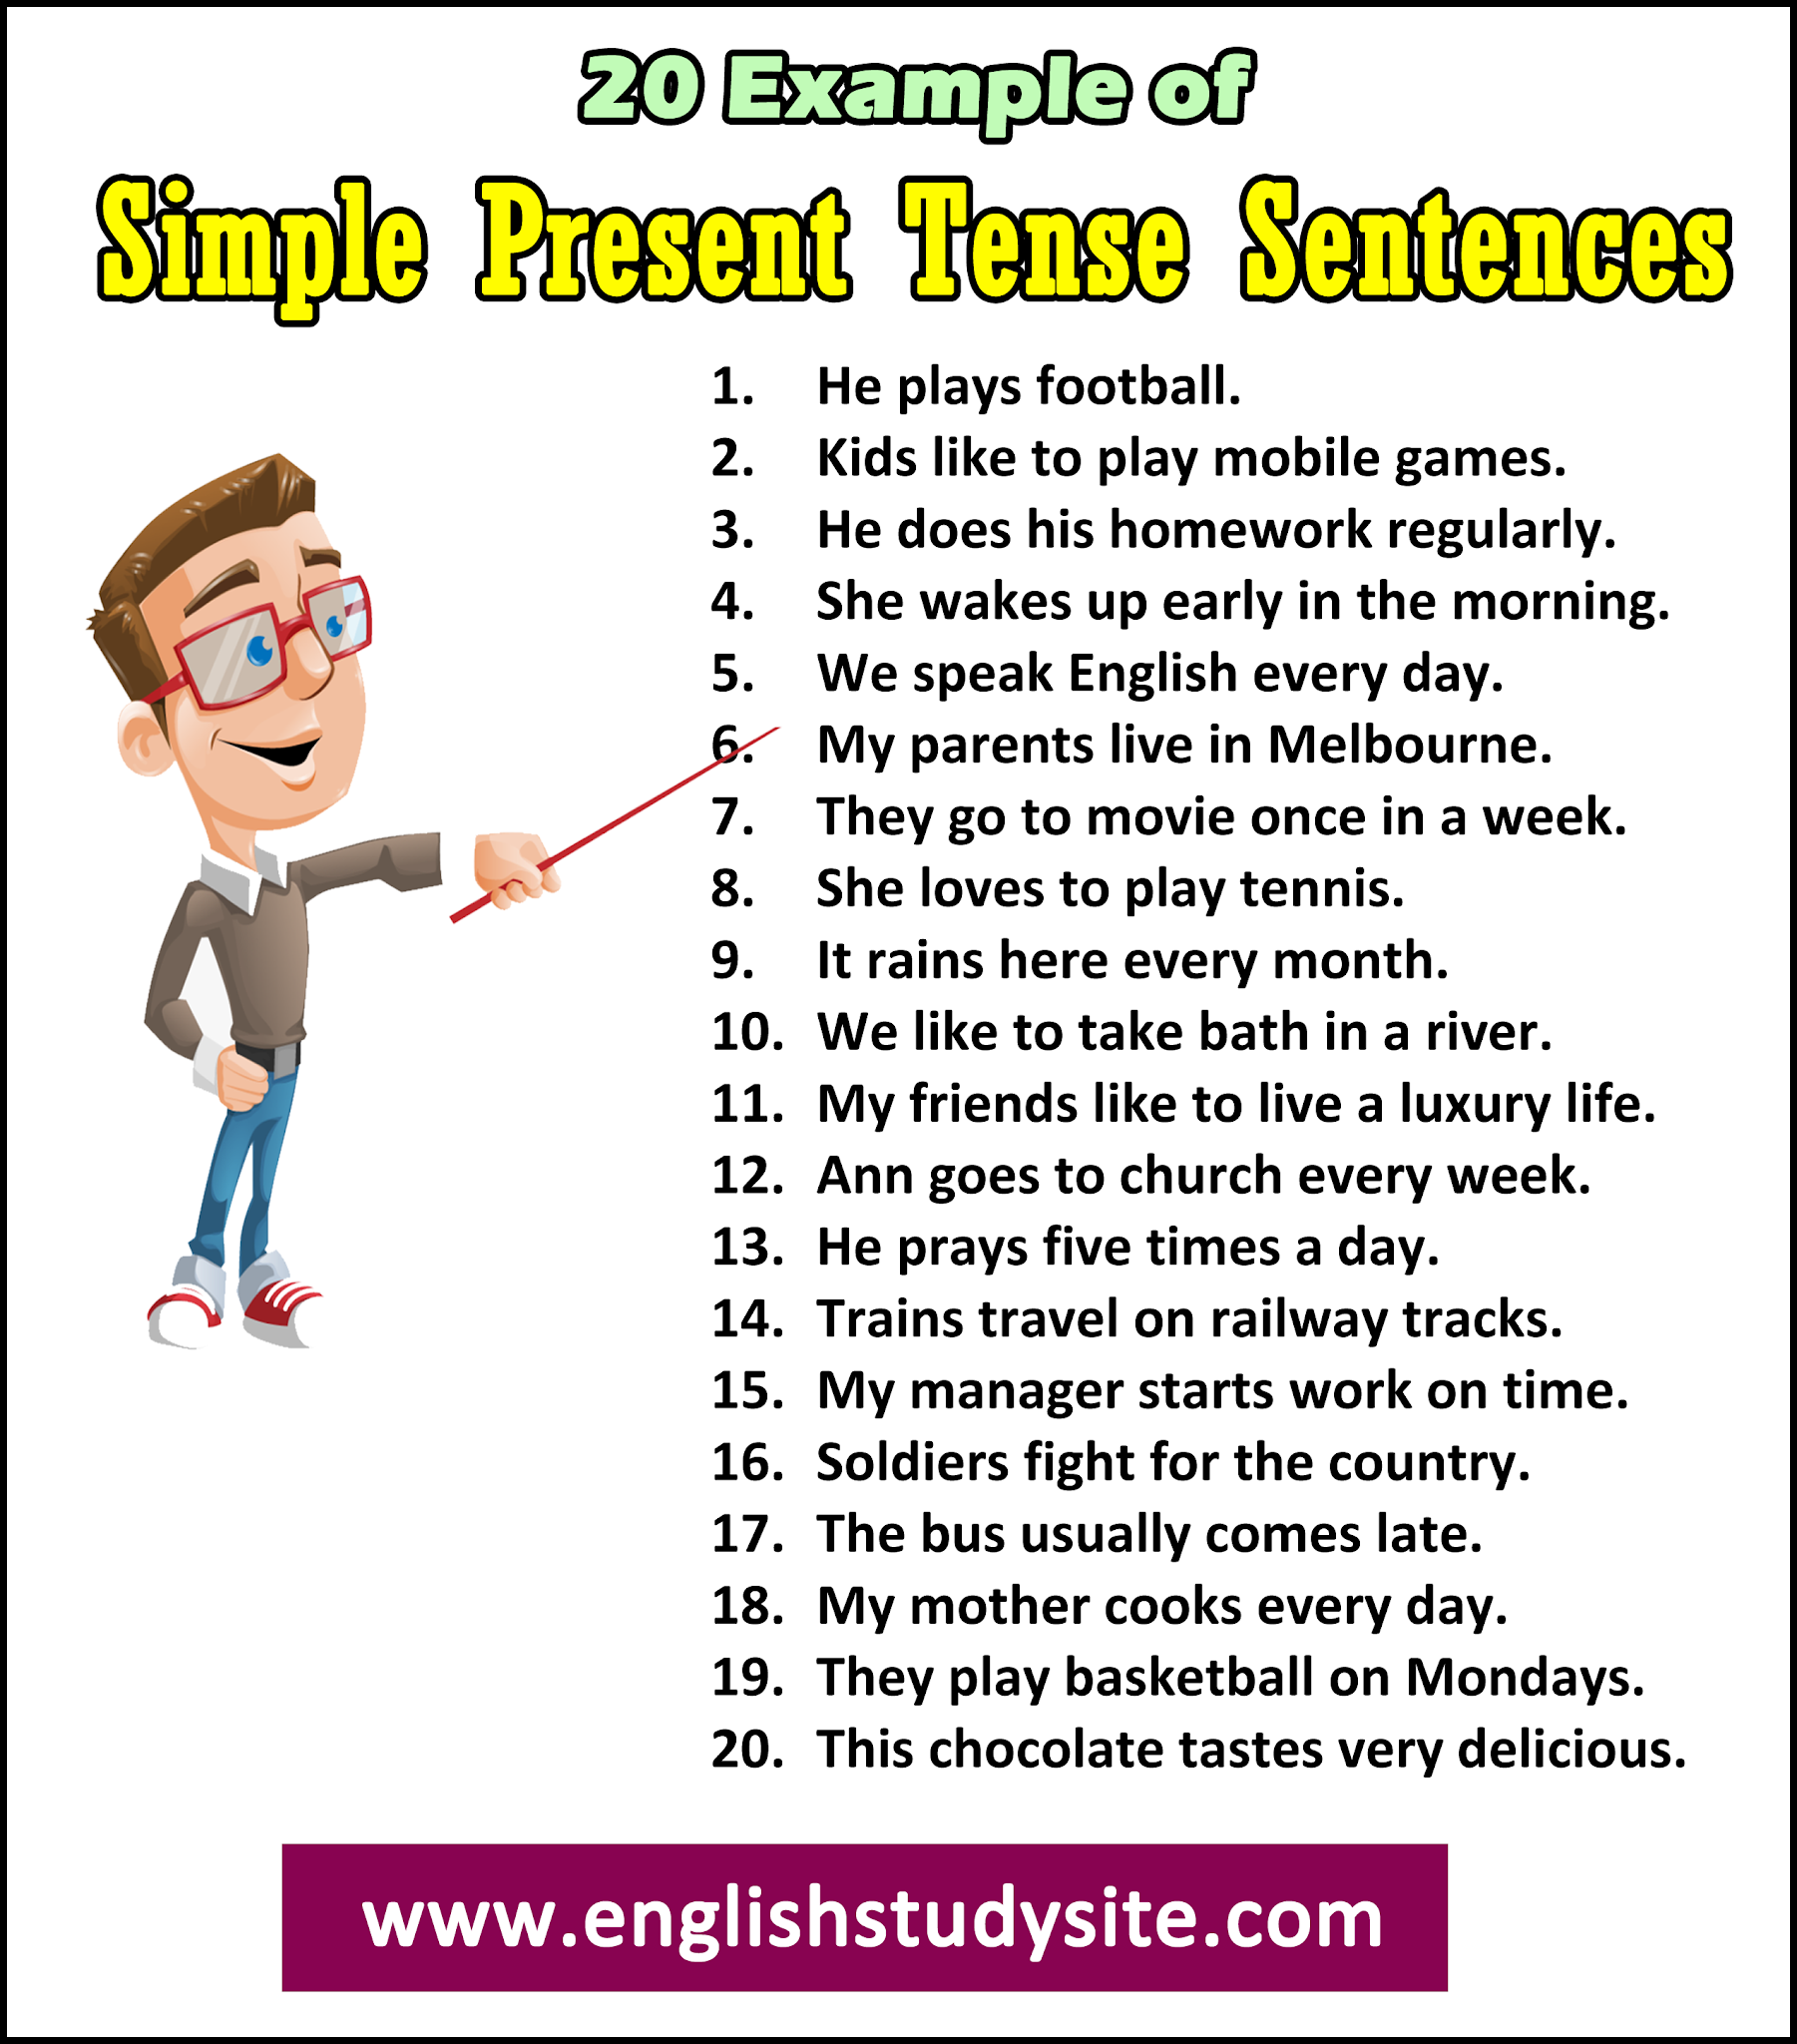 20-example-sentences-of-simple-present-tense